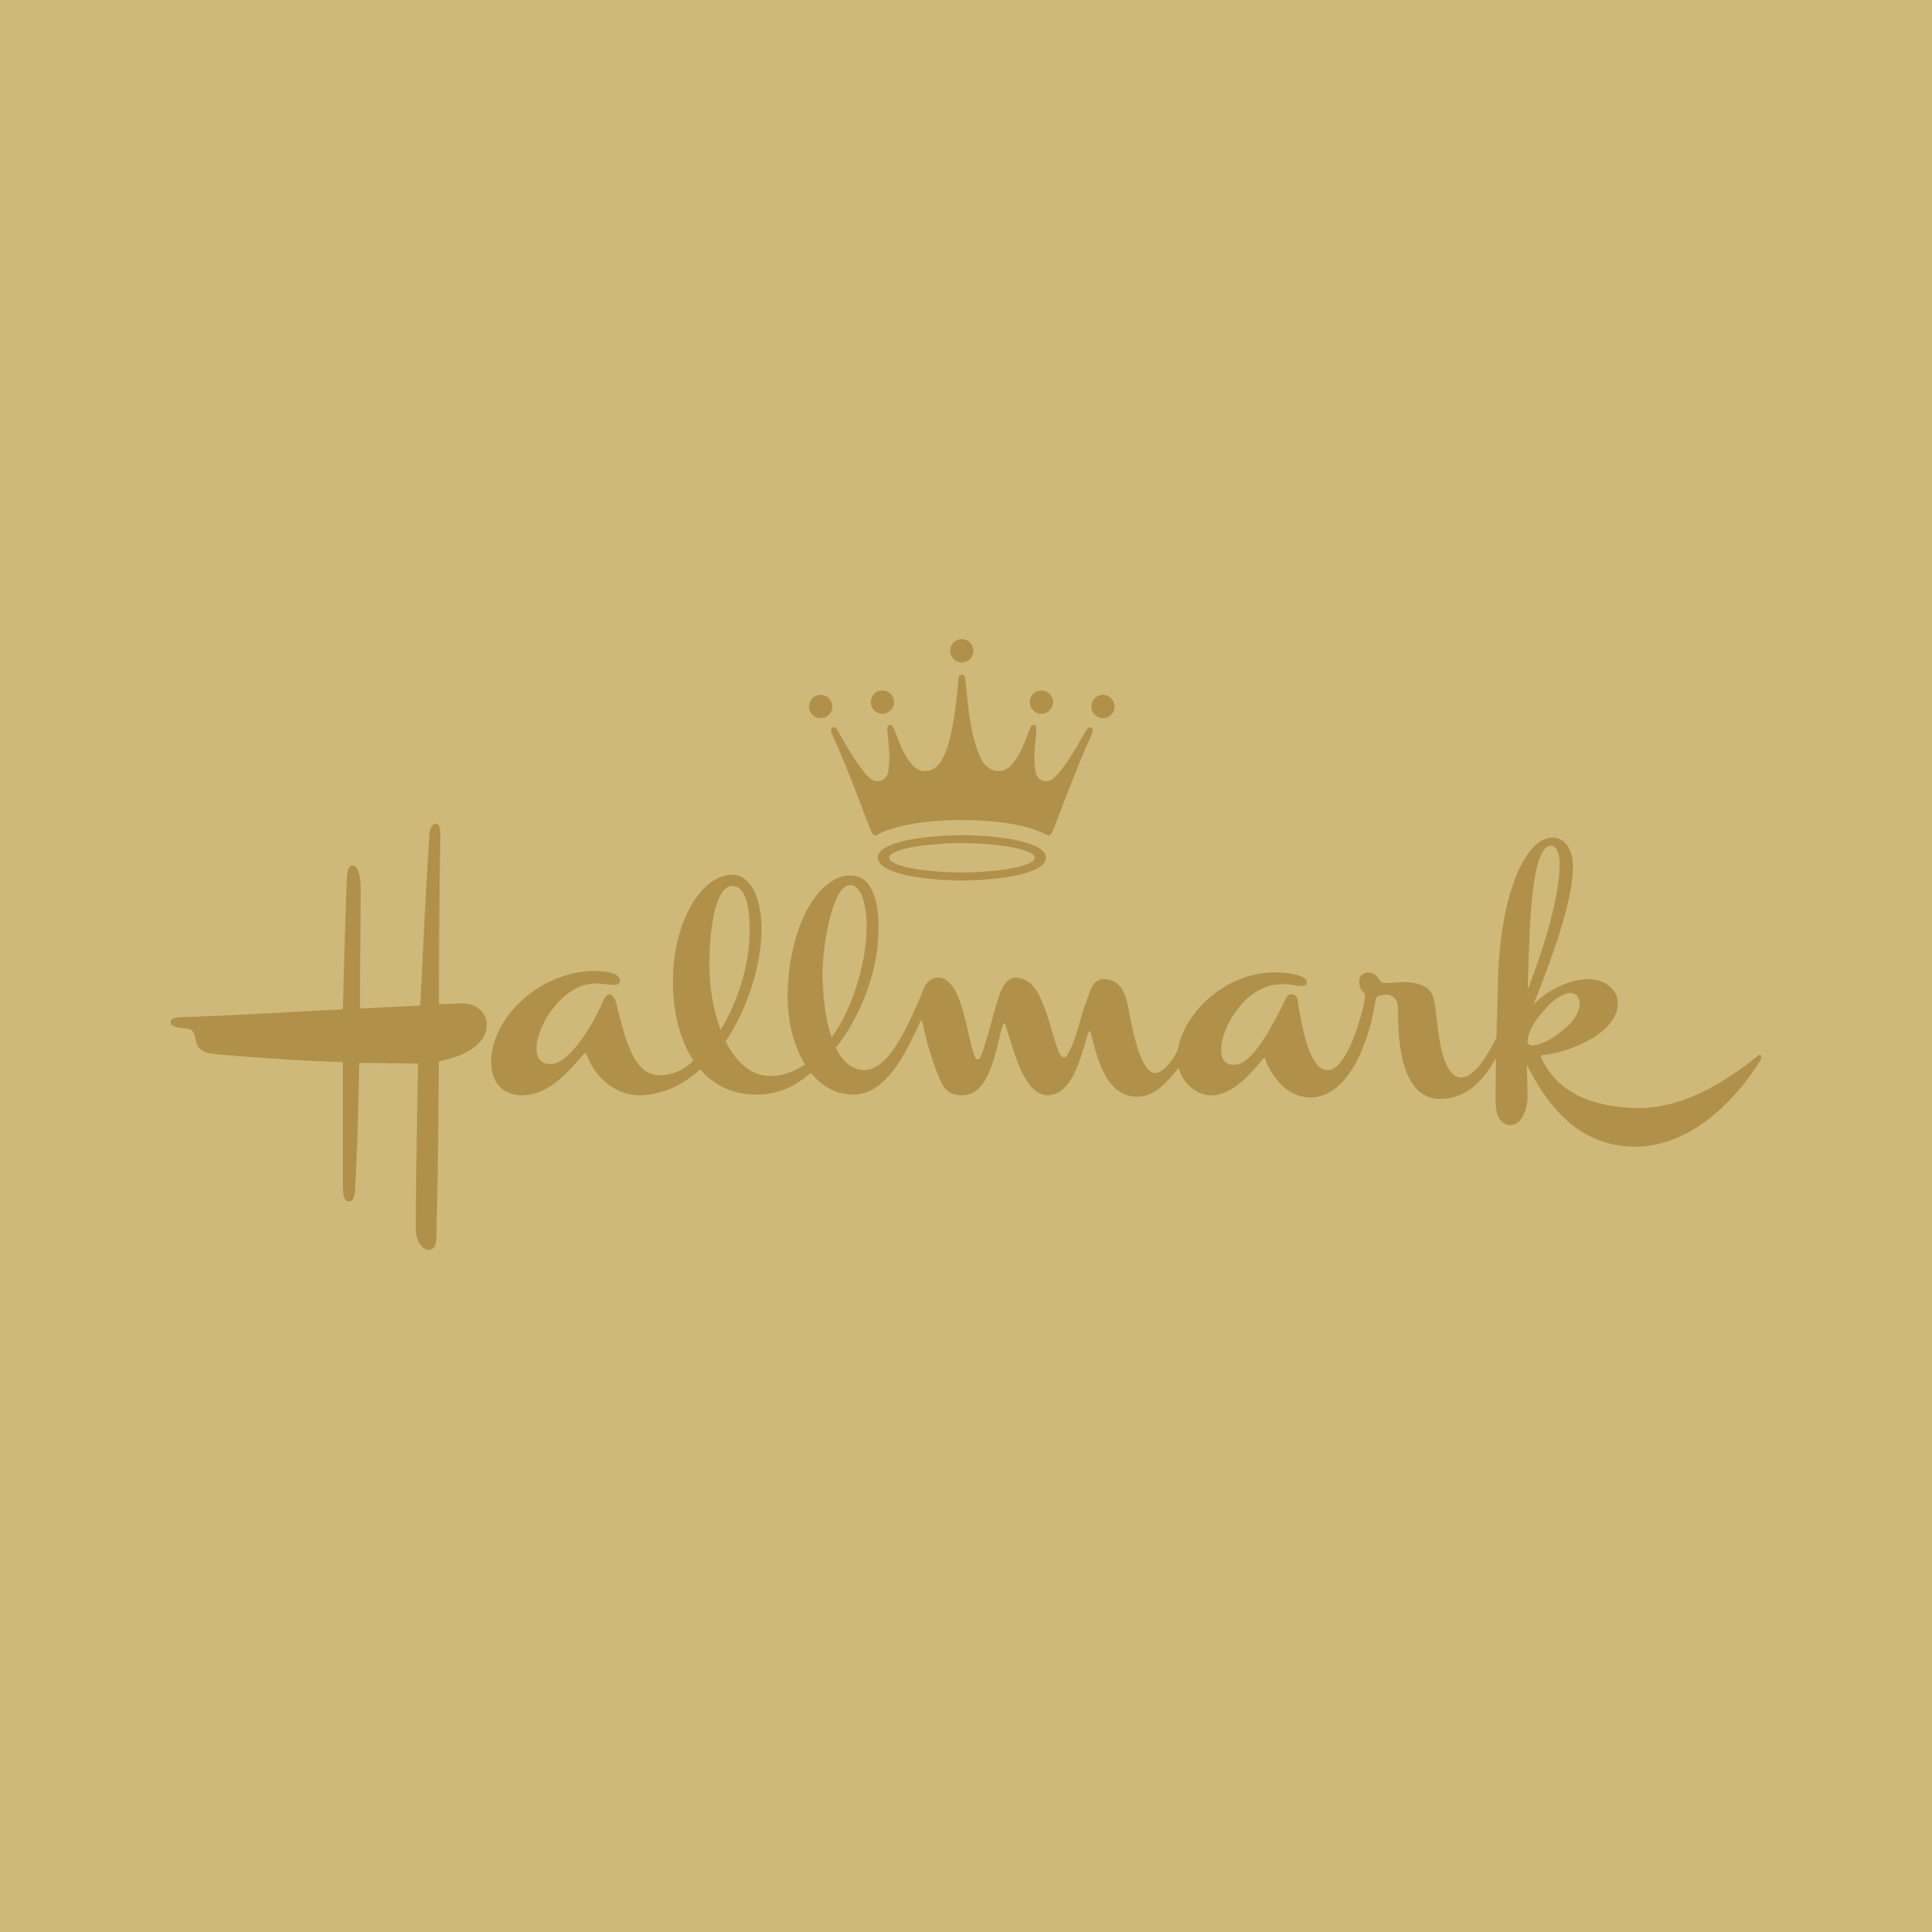 Hallmark Logo PNG Transparent & SVG Vector.